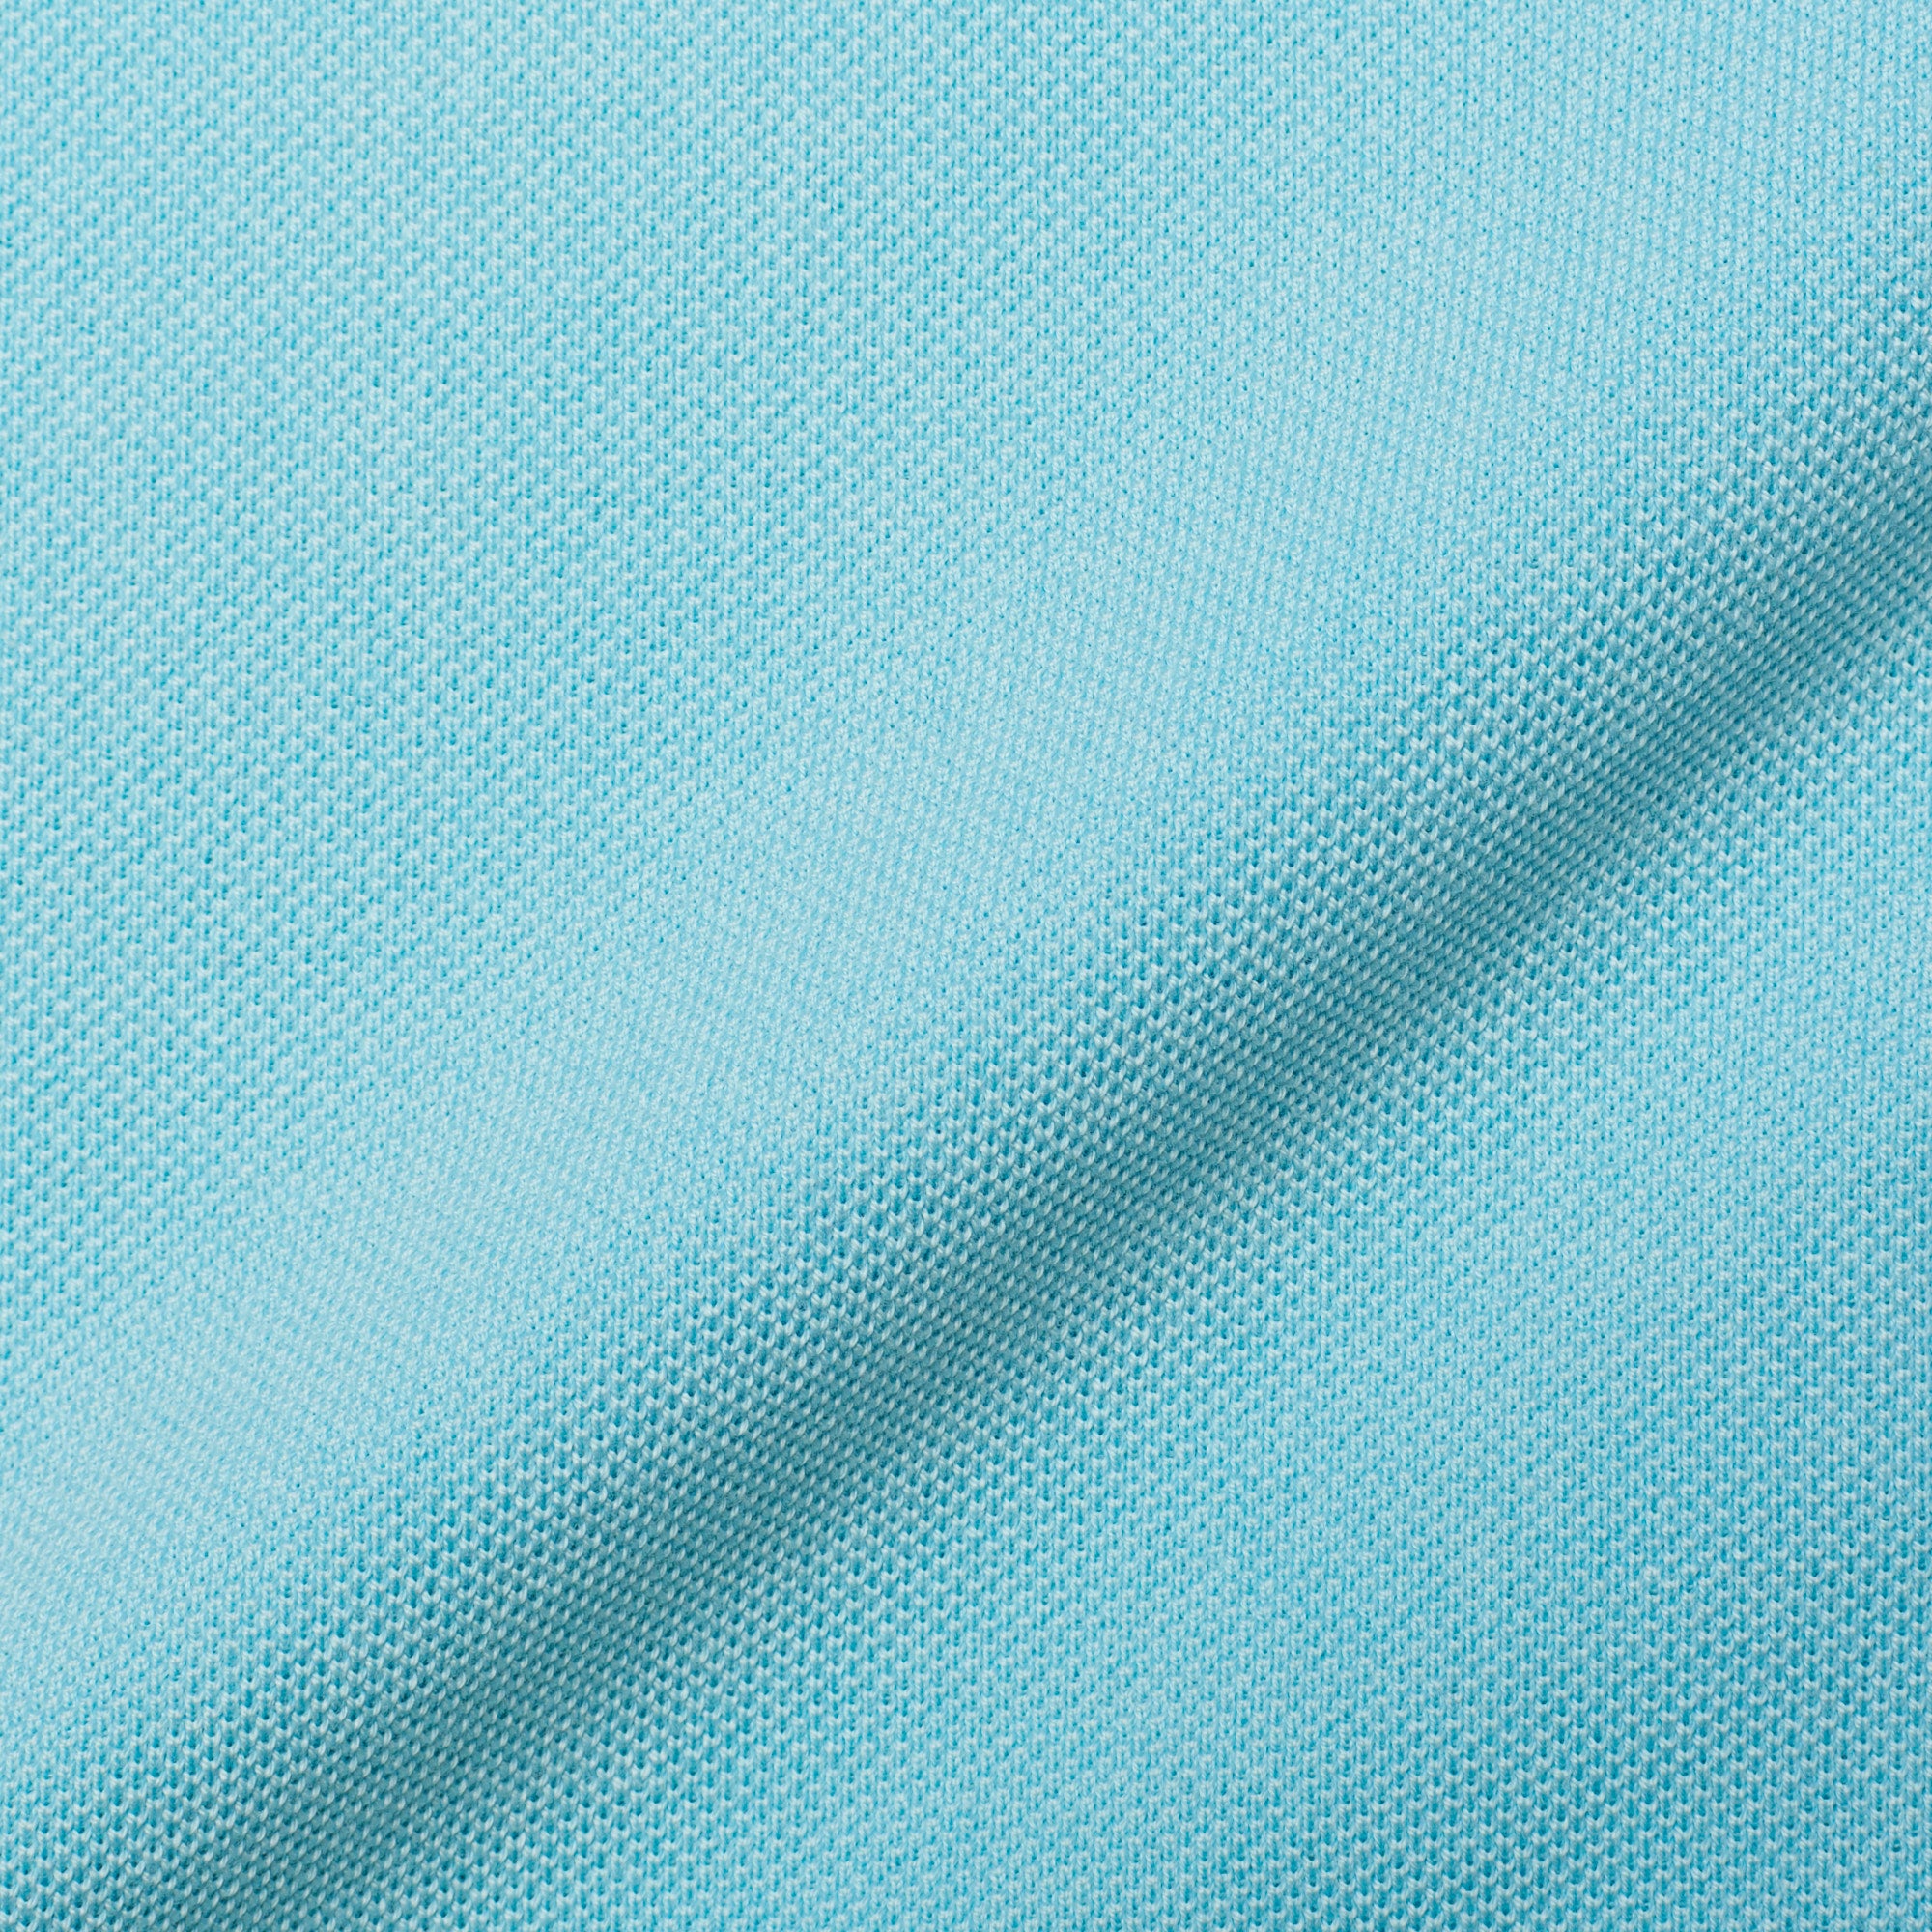 FEDELI "North" Turquoise Cotton Pique Short Sleeve Polo Shirt EU 50 NEW US M FEDELI